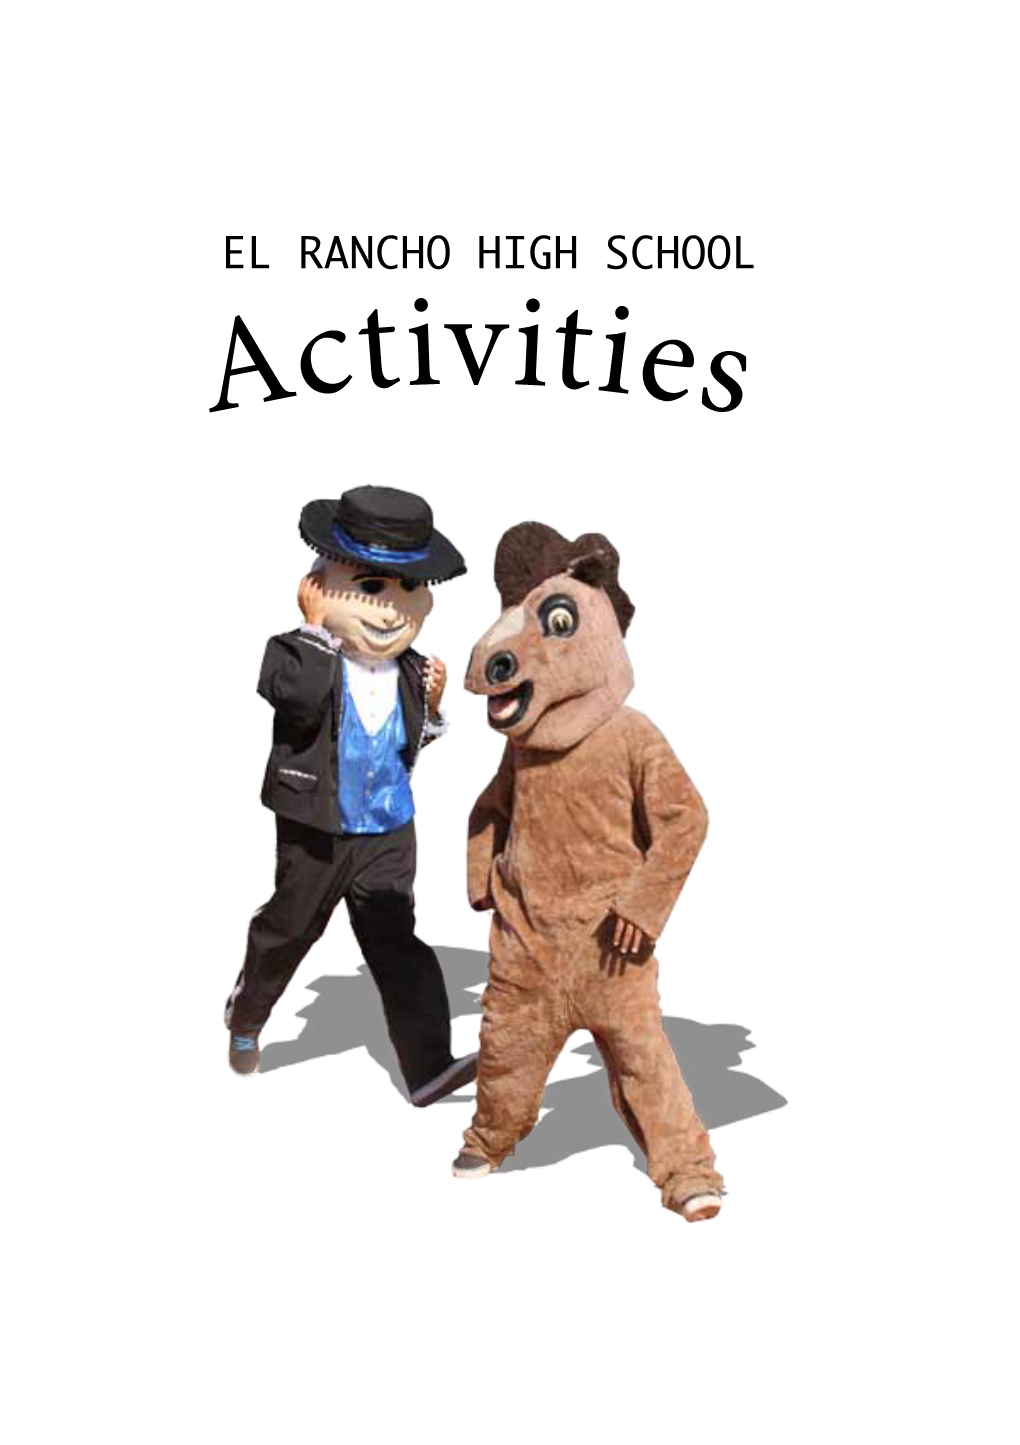 EL RANCHO HIGH SCHOOL Activities Contact Info